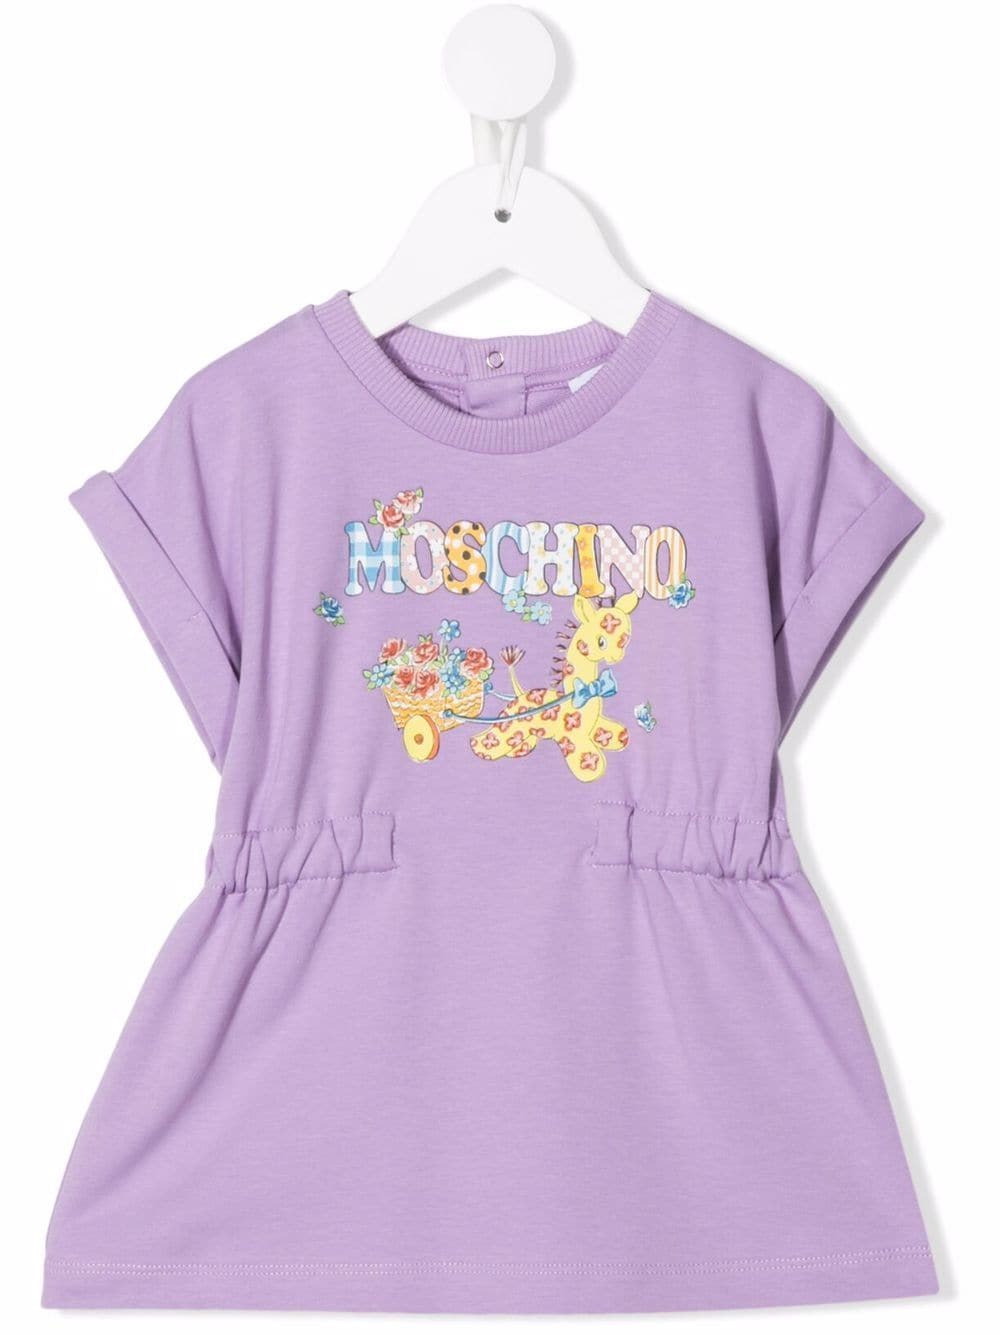 Moschino Baby Dress In Lilac Sweatshirt With Calico Giraffe Print